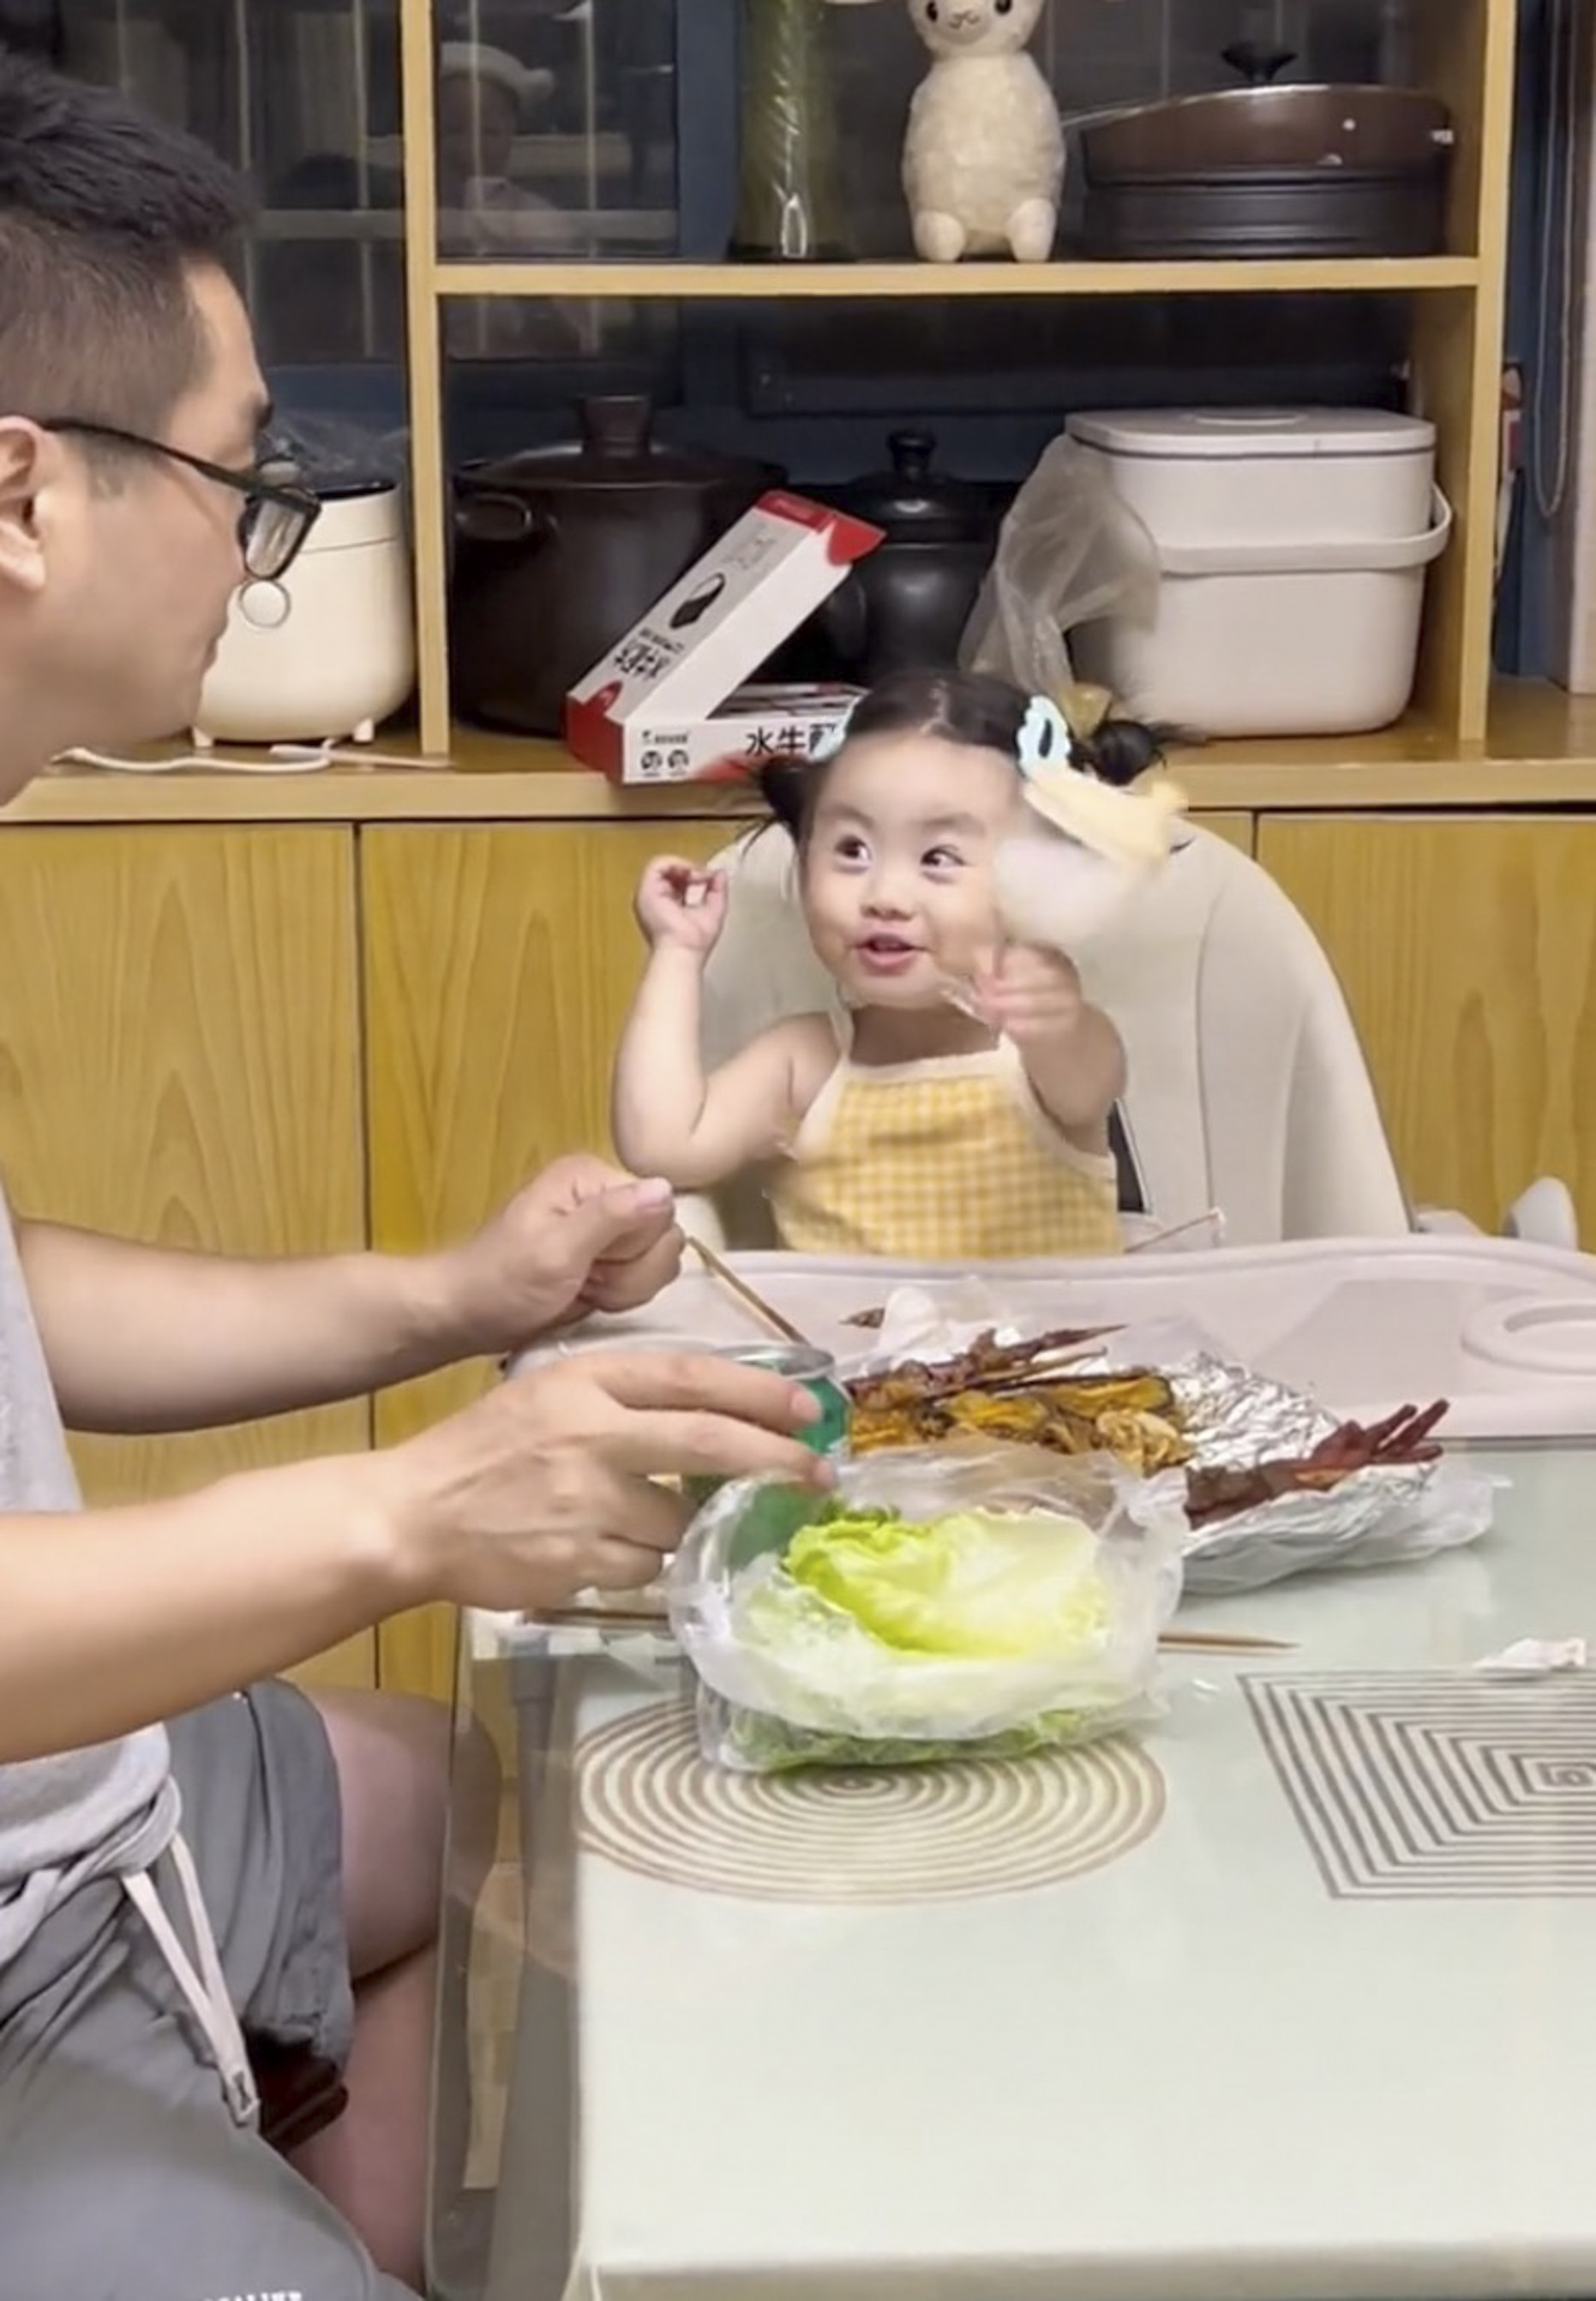 china people eating babies